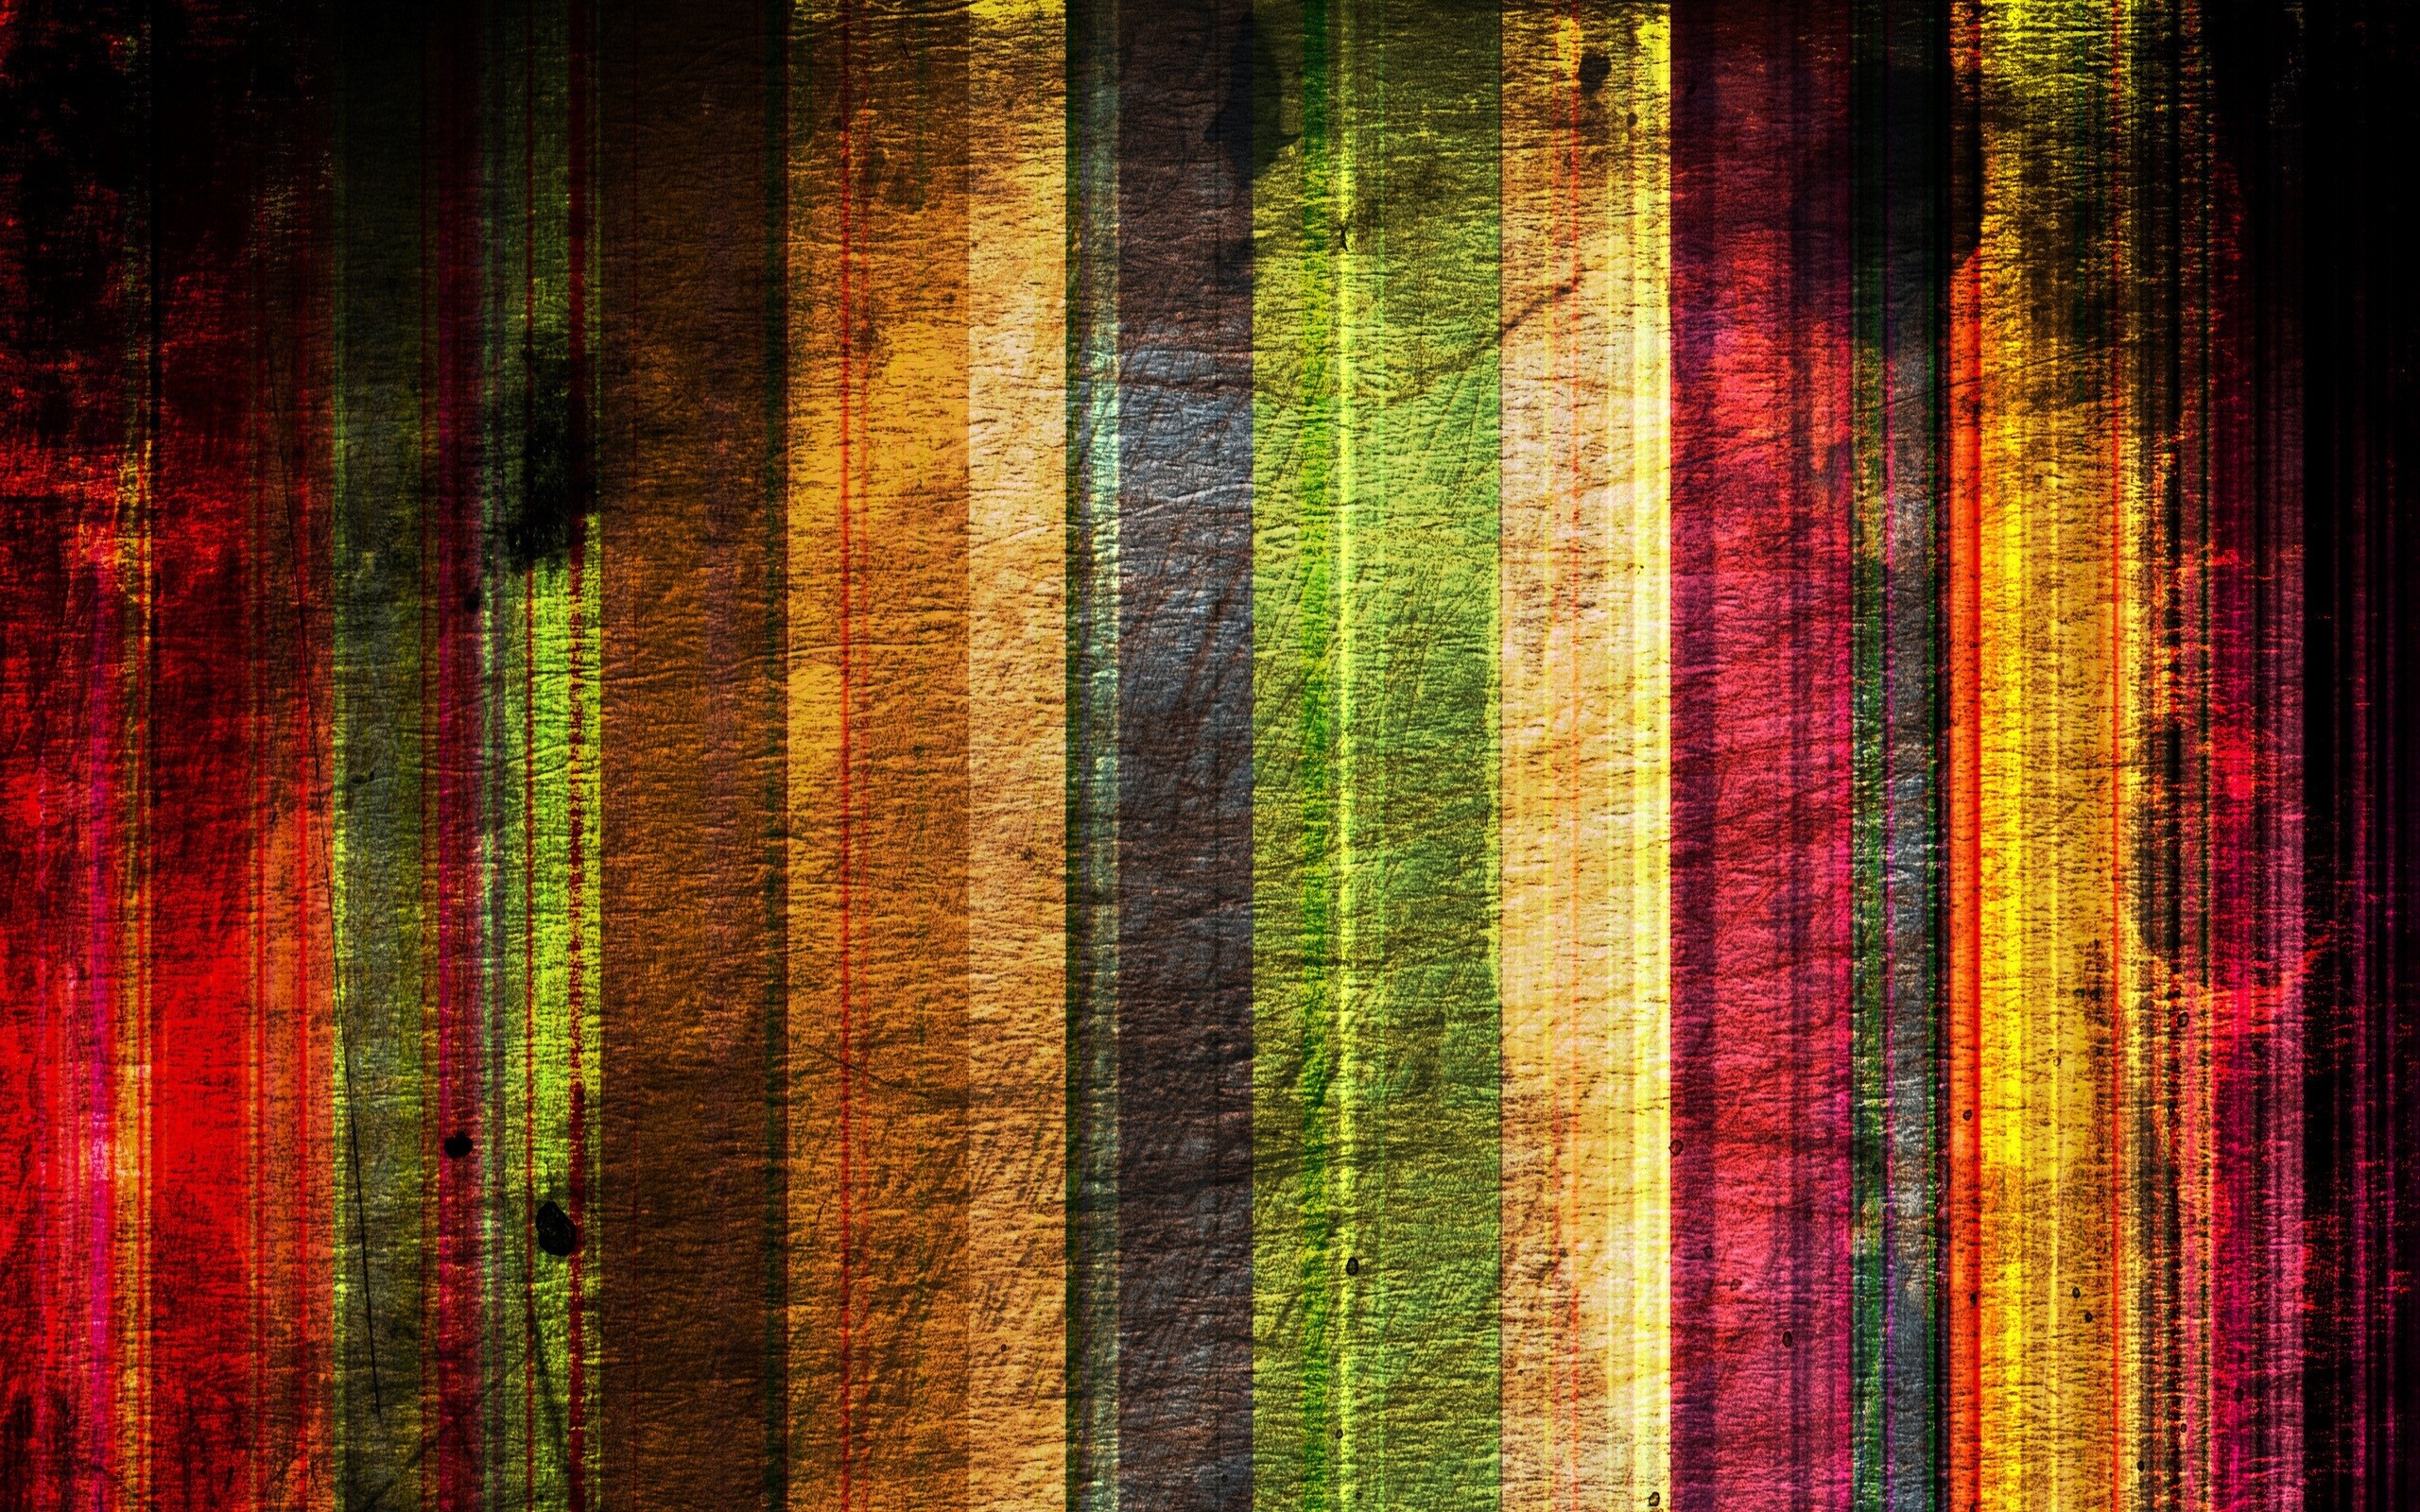  Gunge Texture wallpapers Multicolor Gunge Texture stock photos